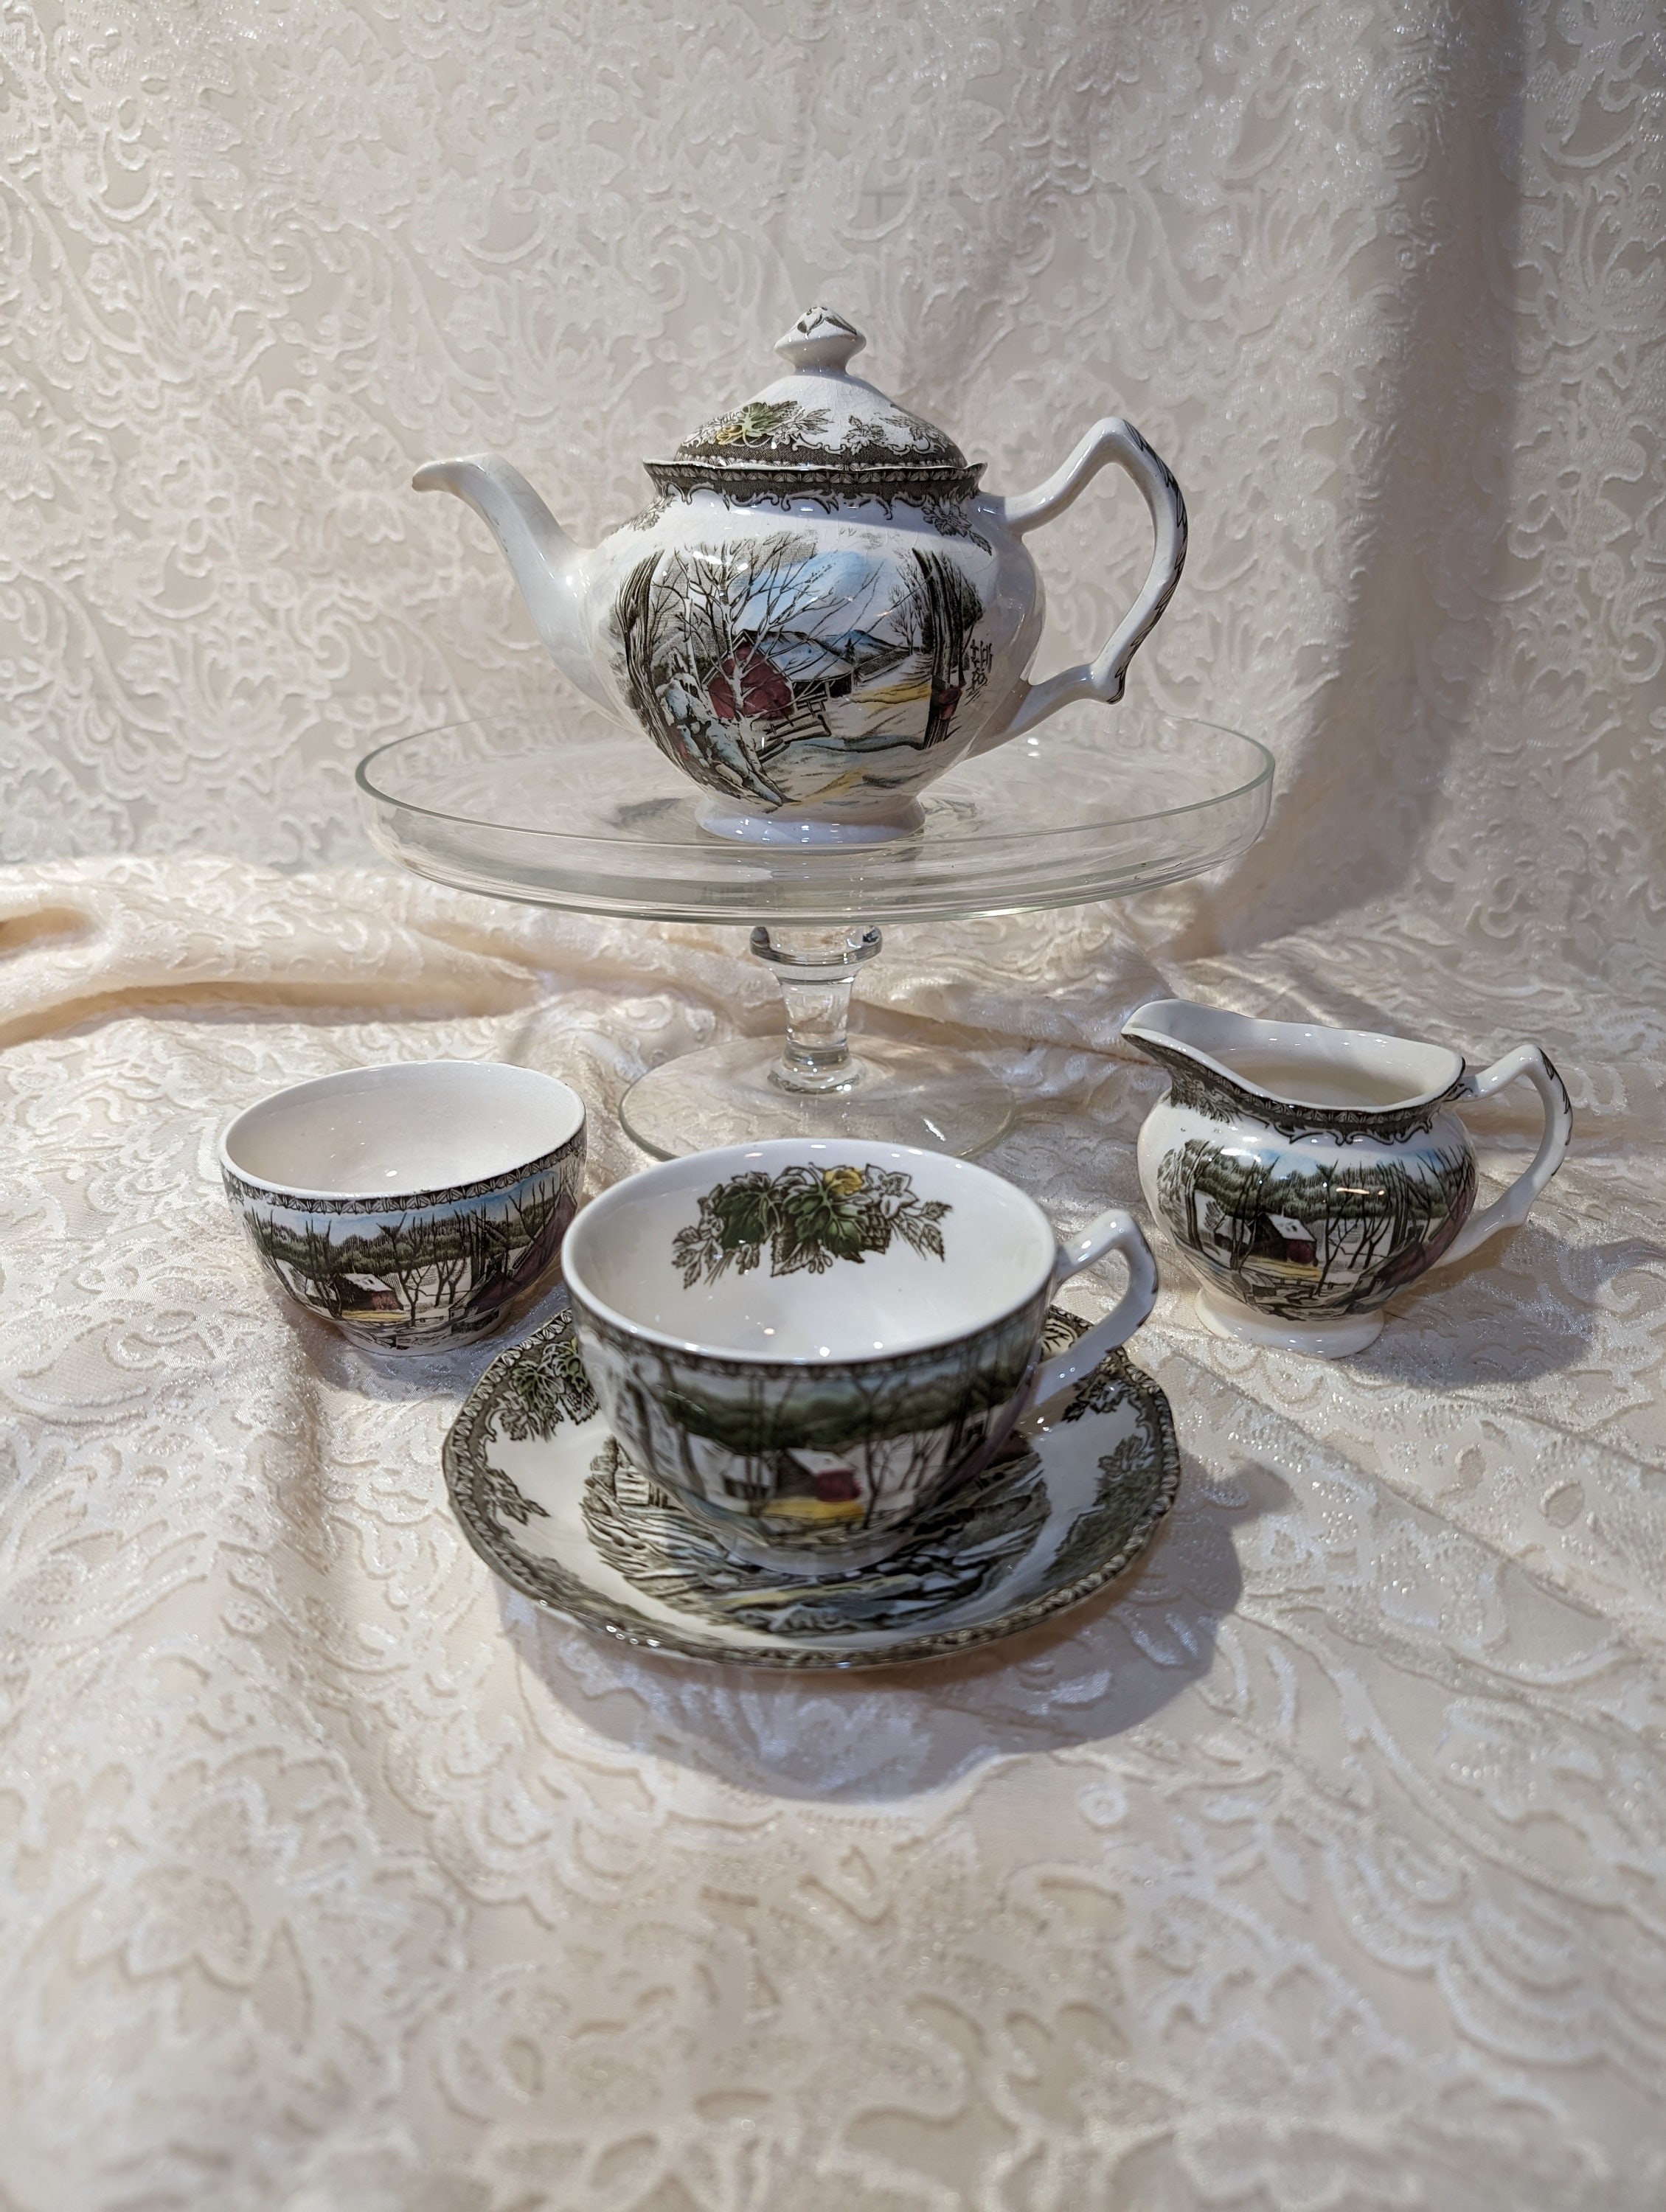 Madeline Pretty Port Tea Set 4 Cups & Plates Creamer Sugar Bowl Teapot 13  Piece